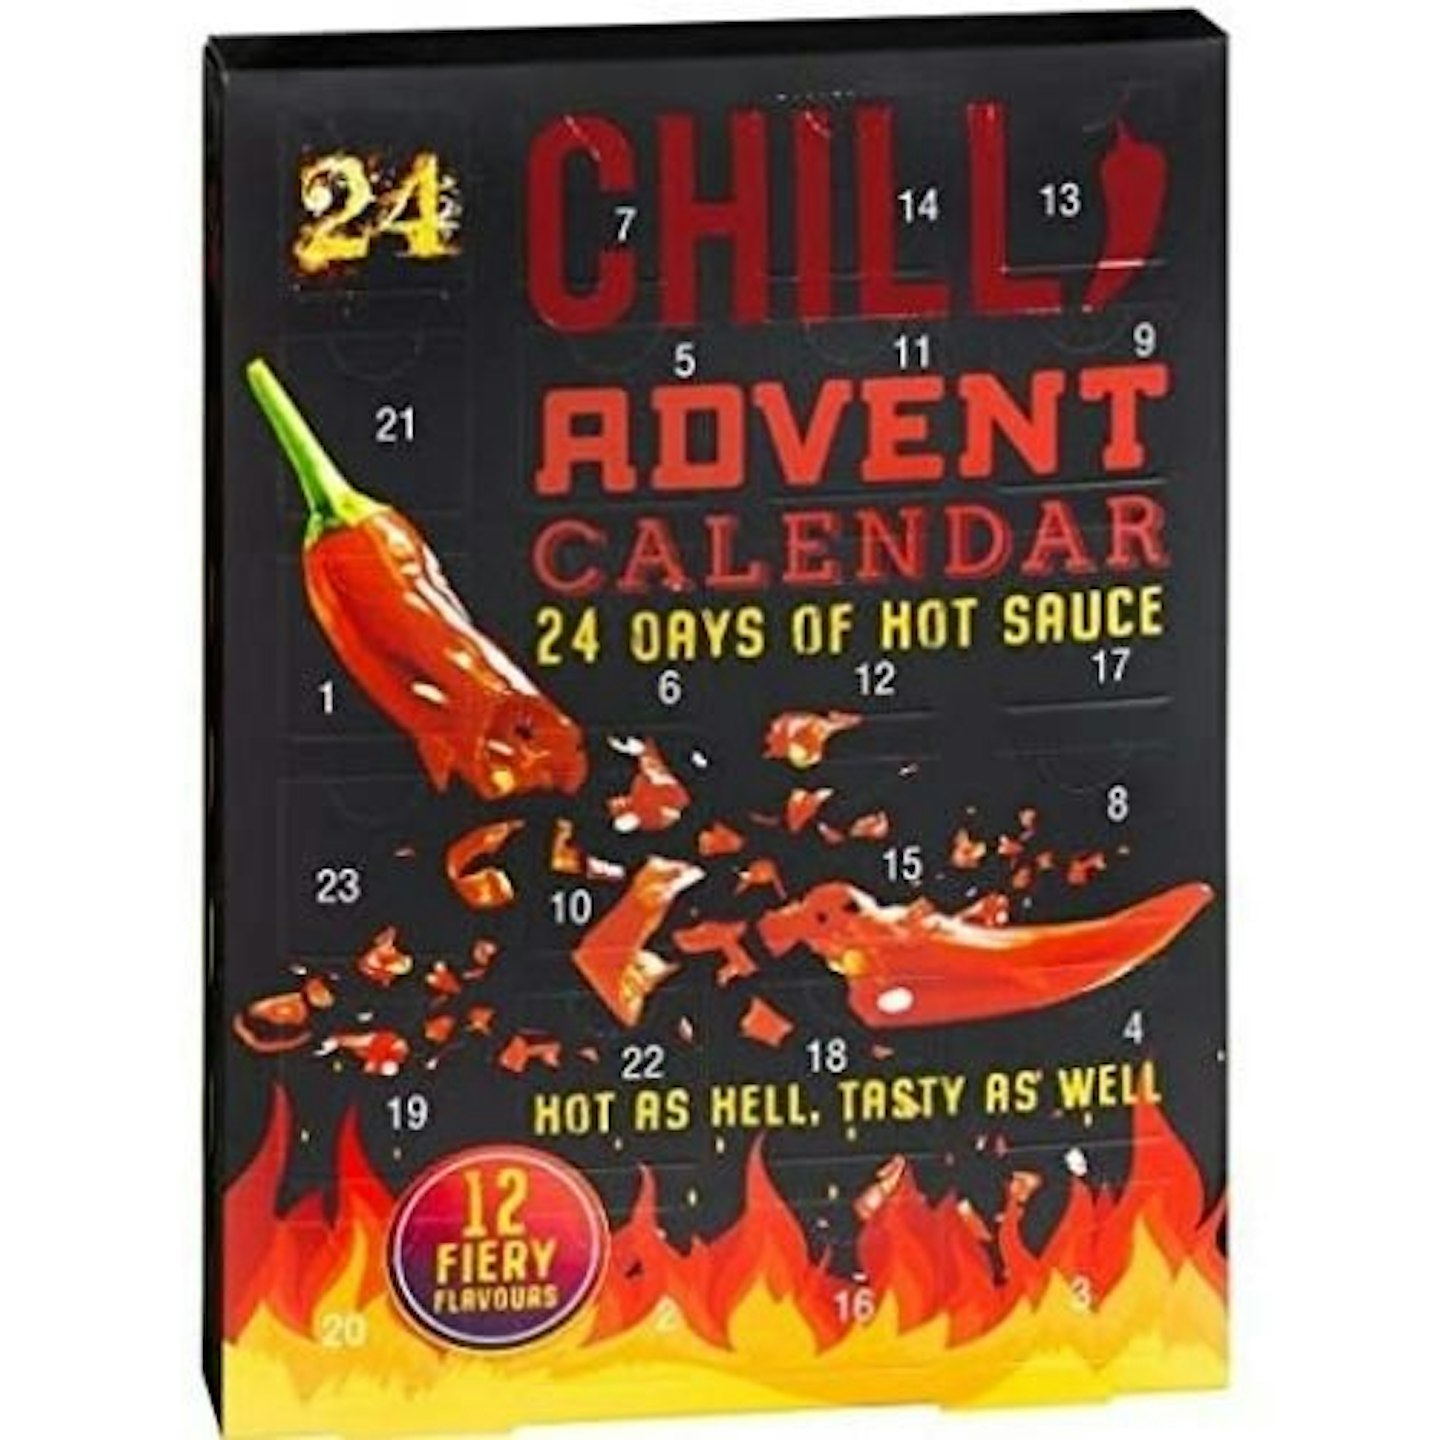 24 Days of Hot Sauce Chilli Lovers Advent Calendar